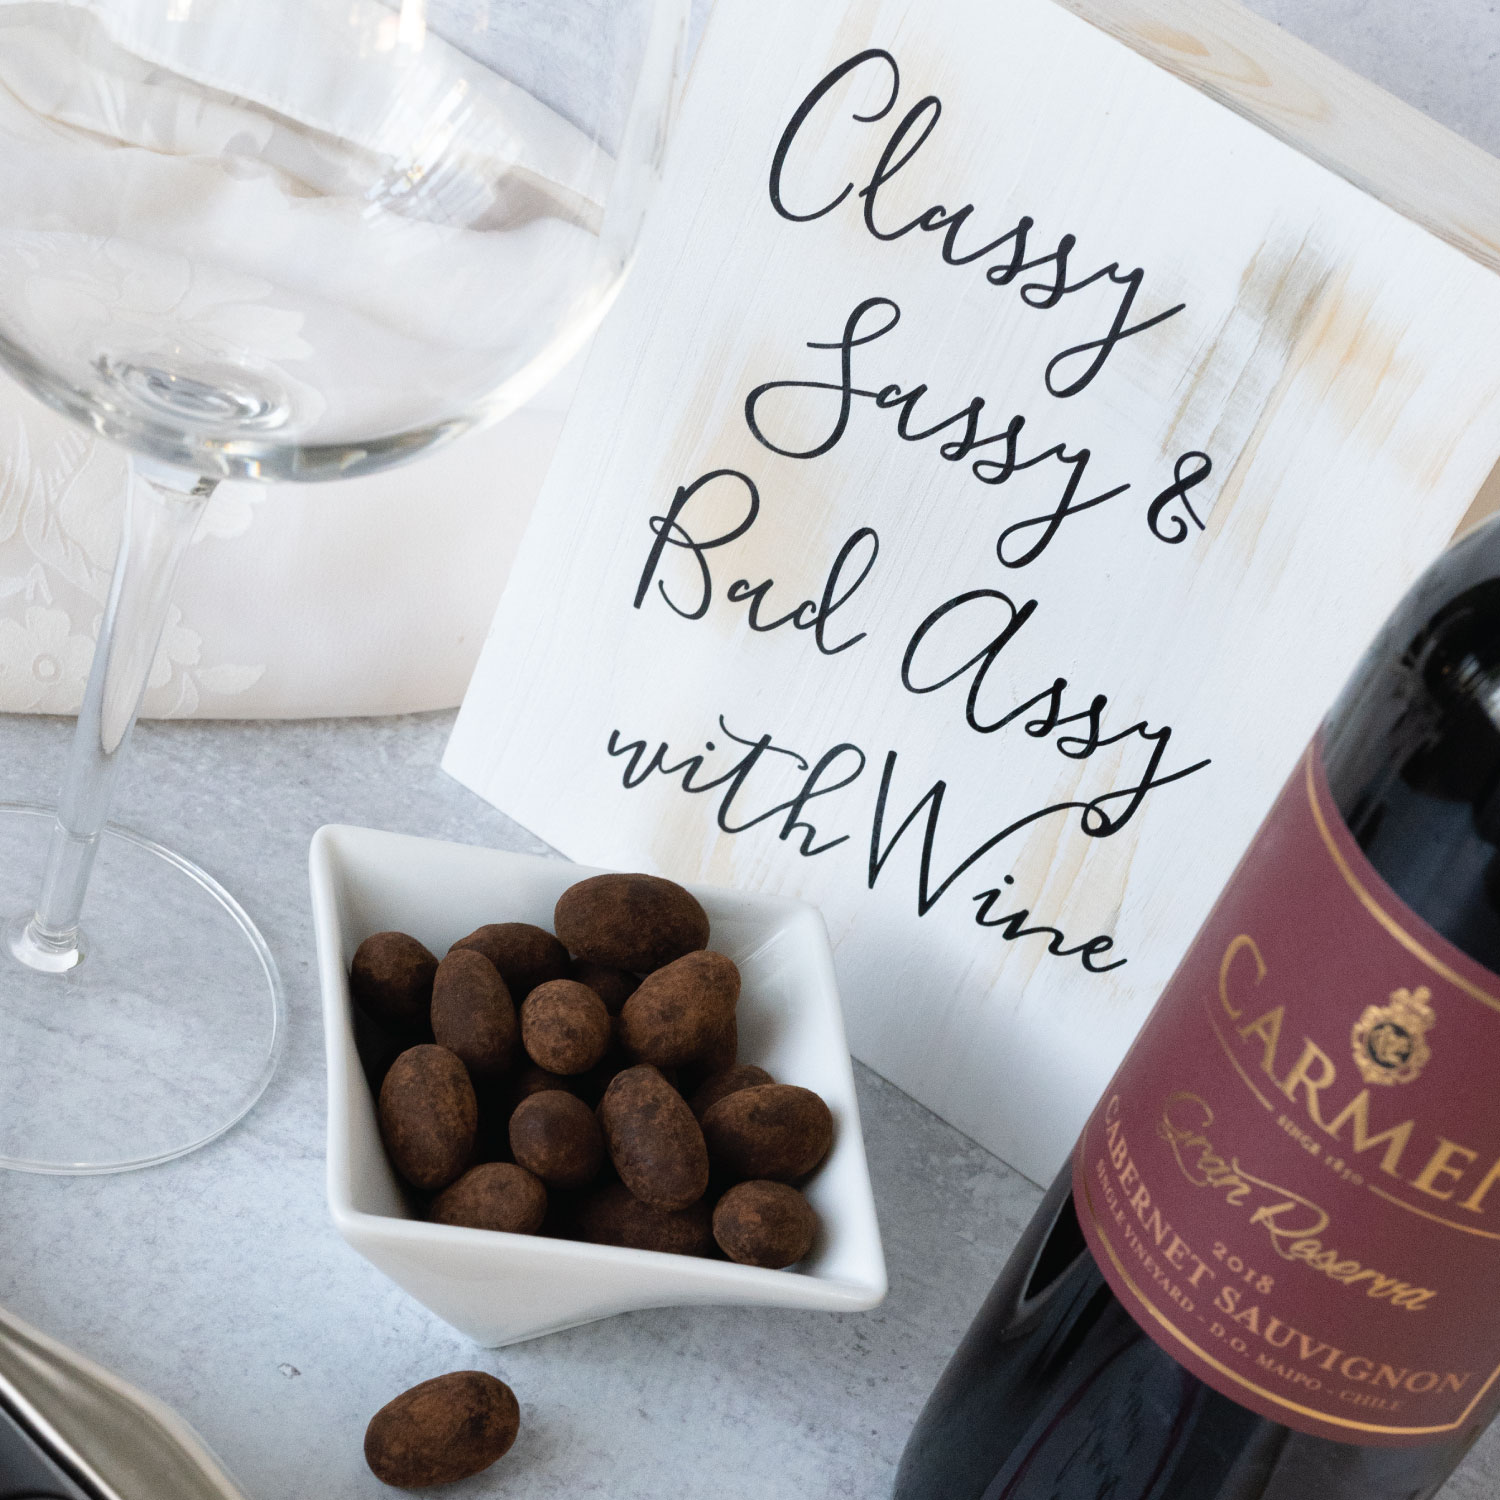 carmen gran reserva 2018 cabernet sauvignon wine pairing with chocolate. click to learn more